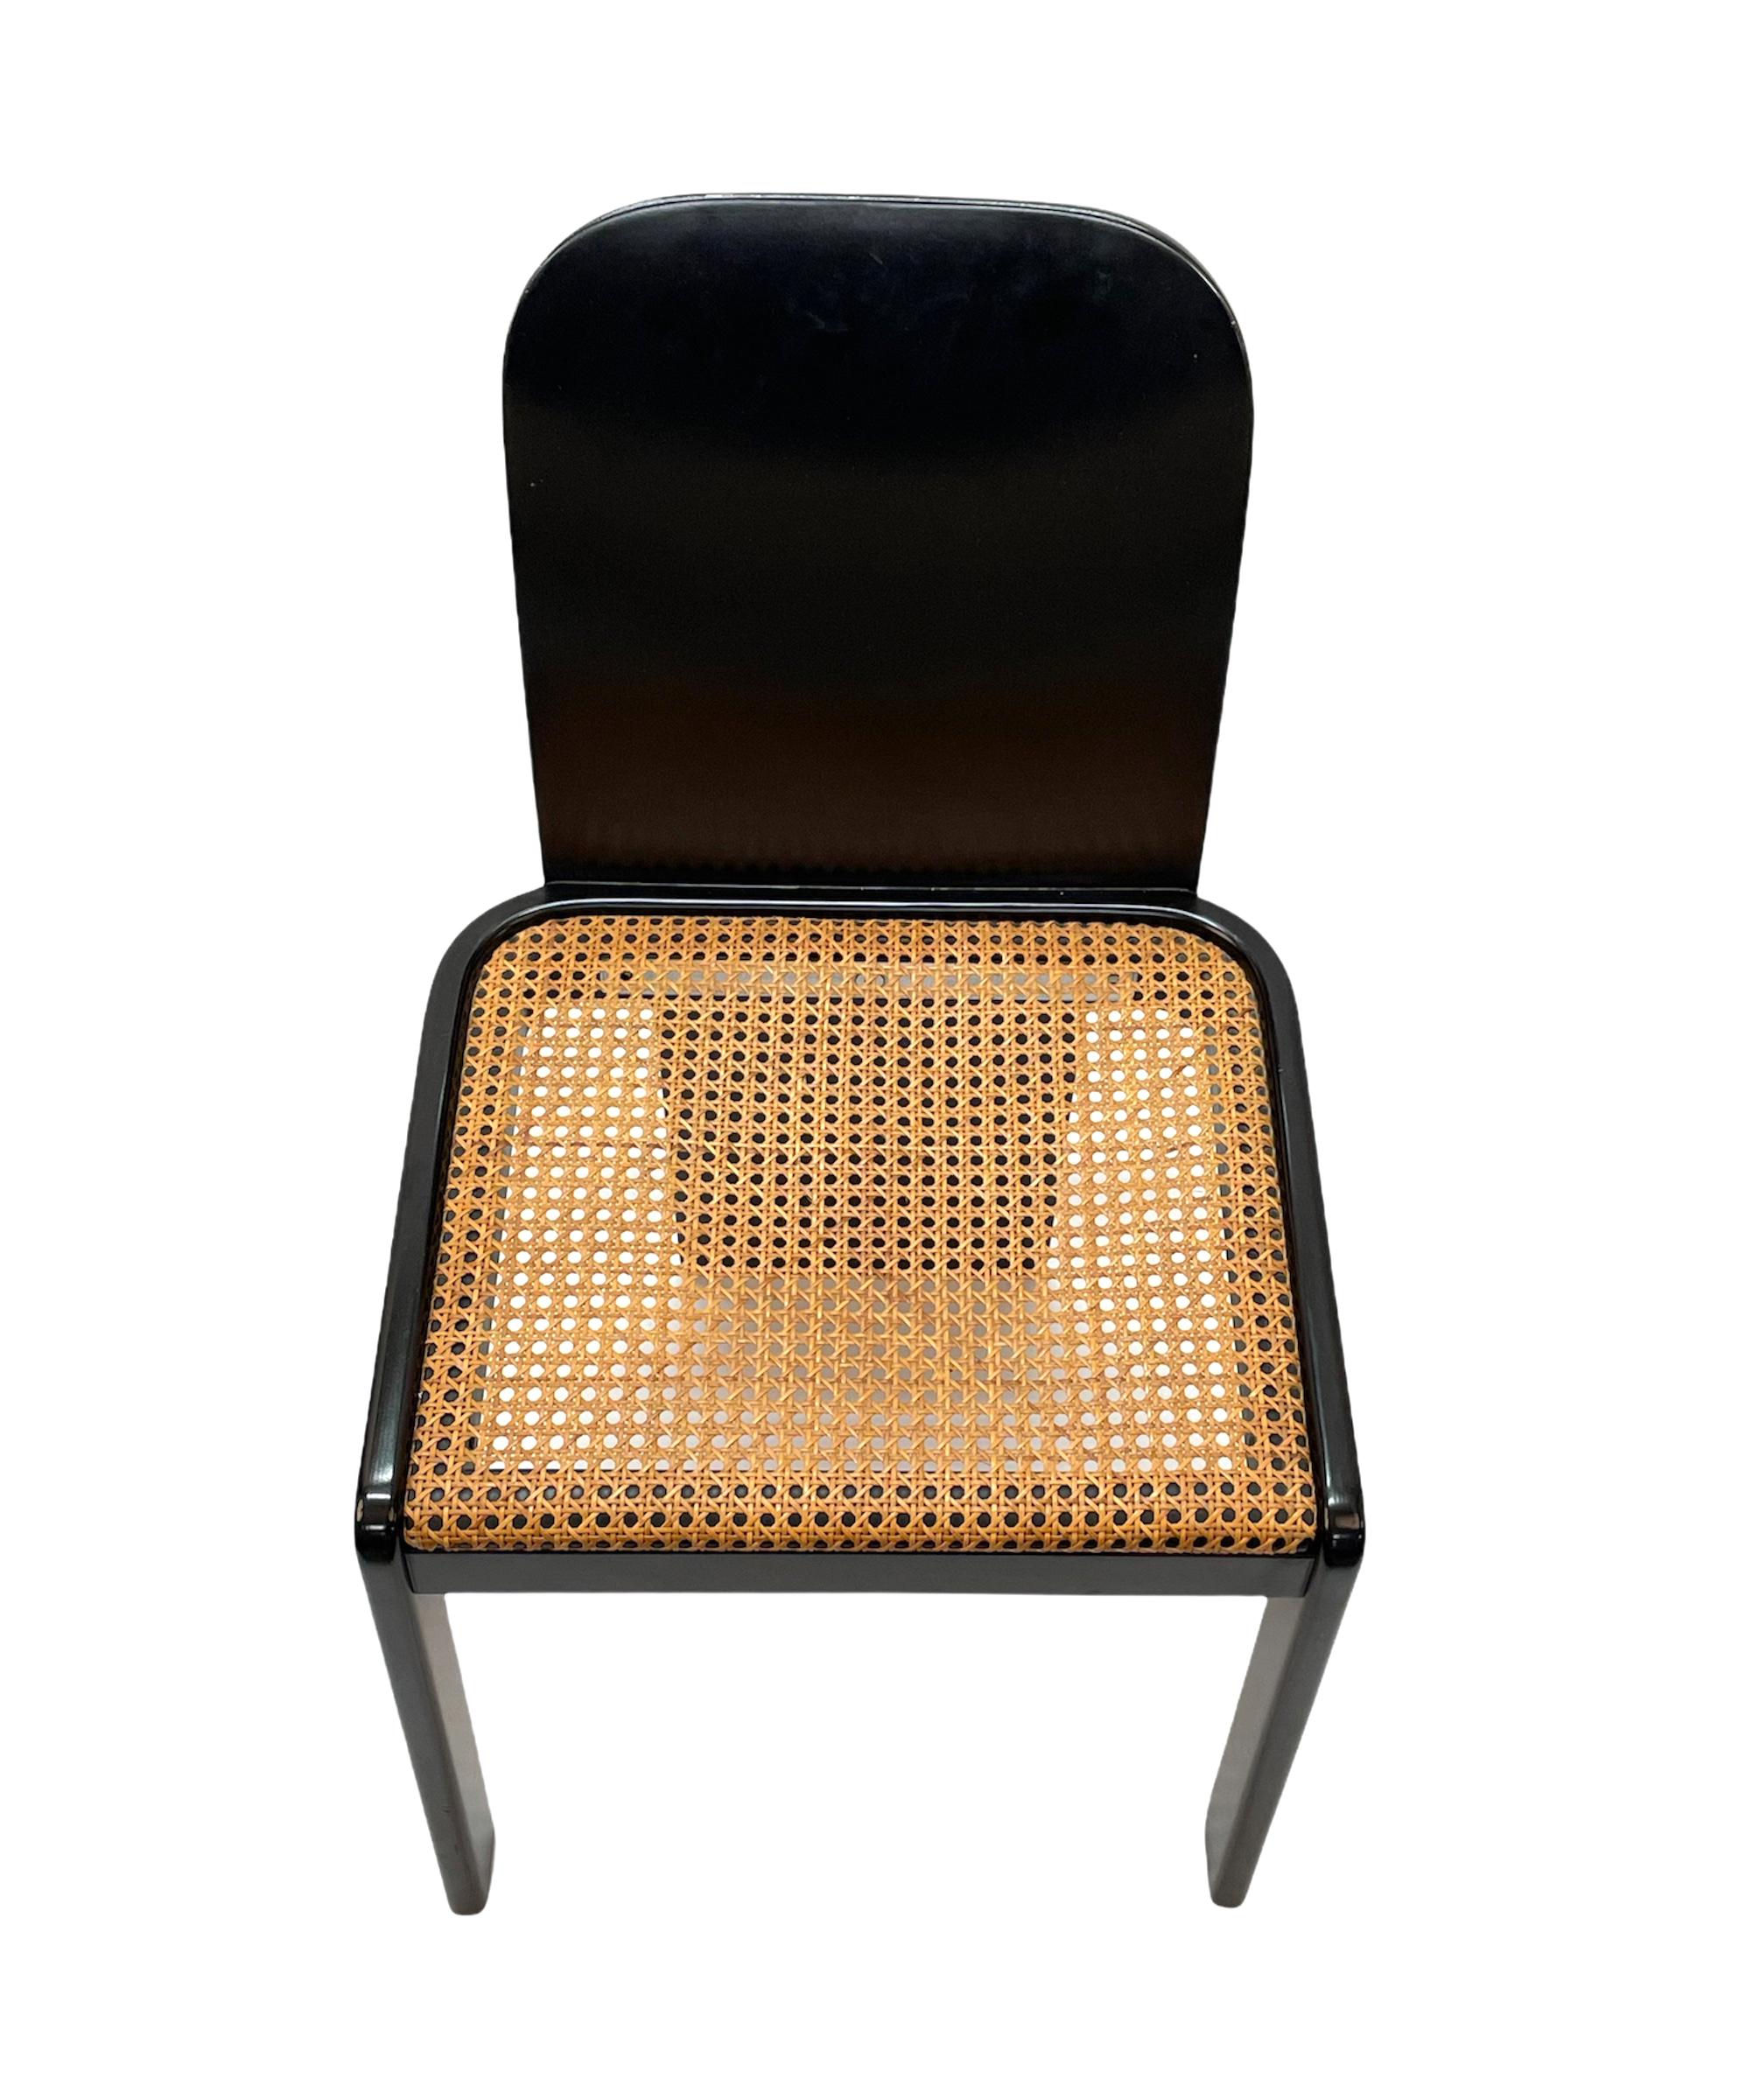 Pierluigi Molinari Midcentury Black Wood Italian Chairs for Pozzi, 1970s 8